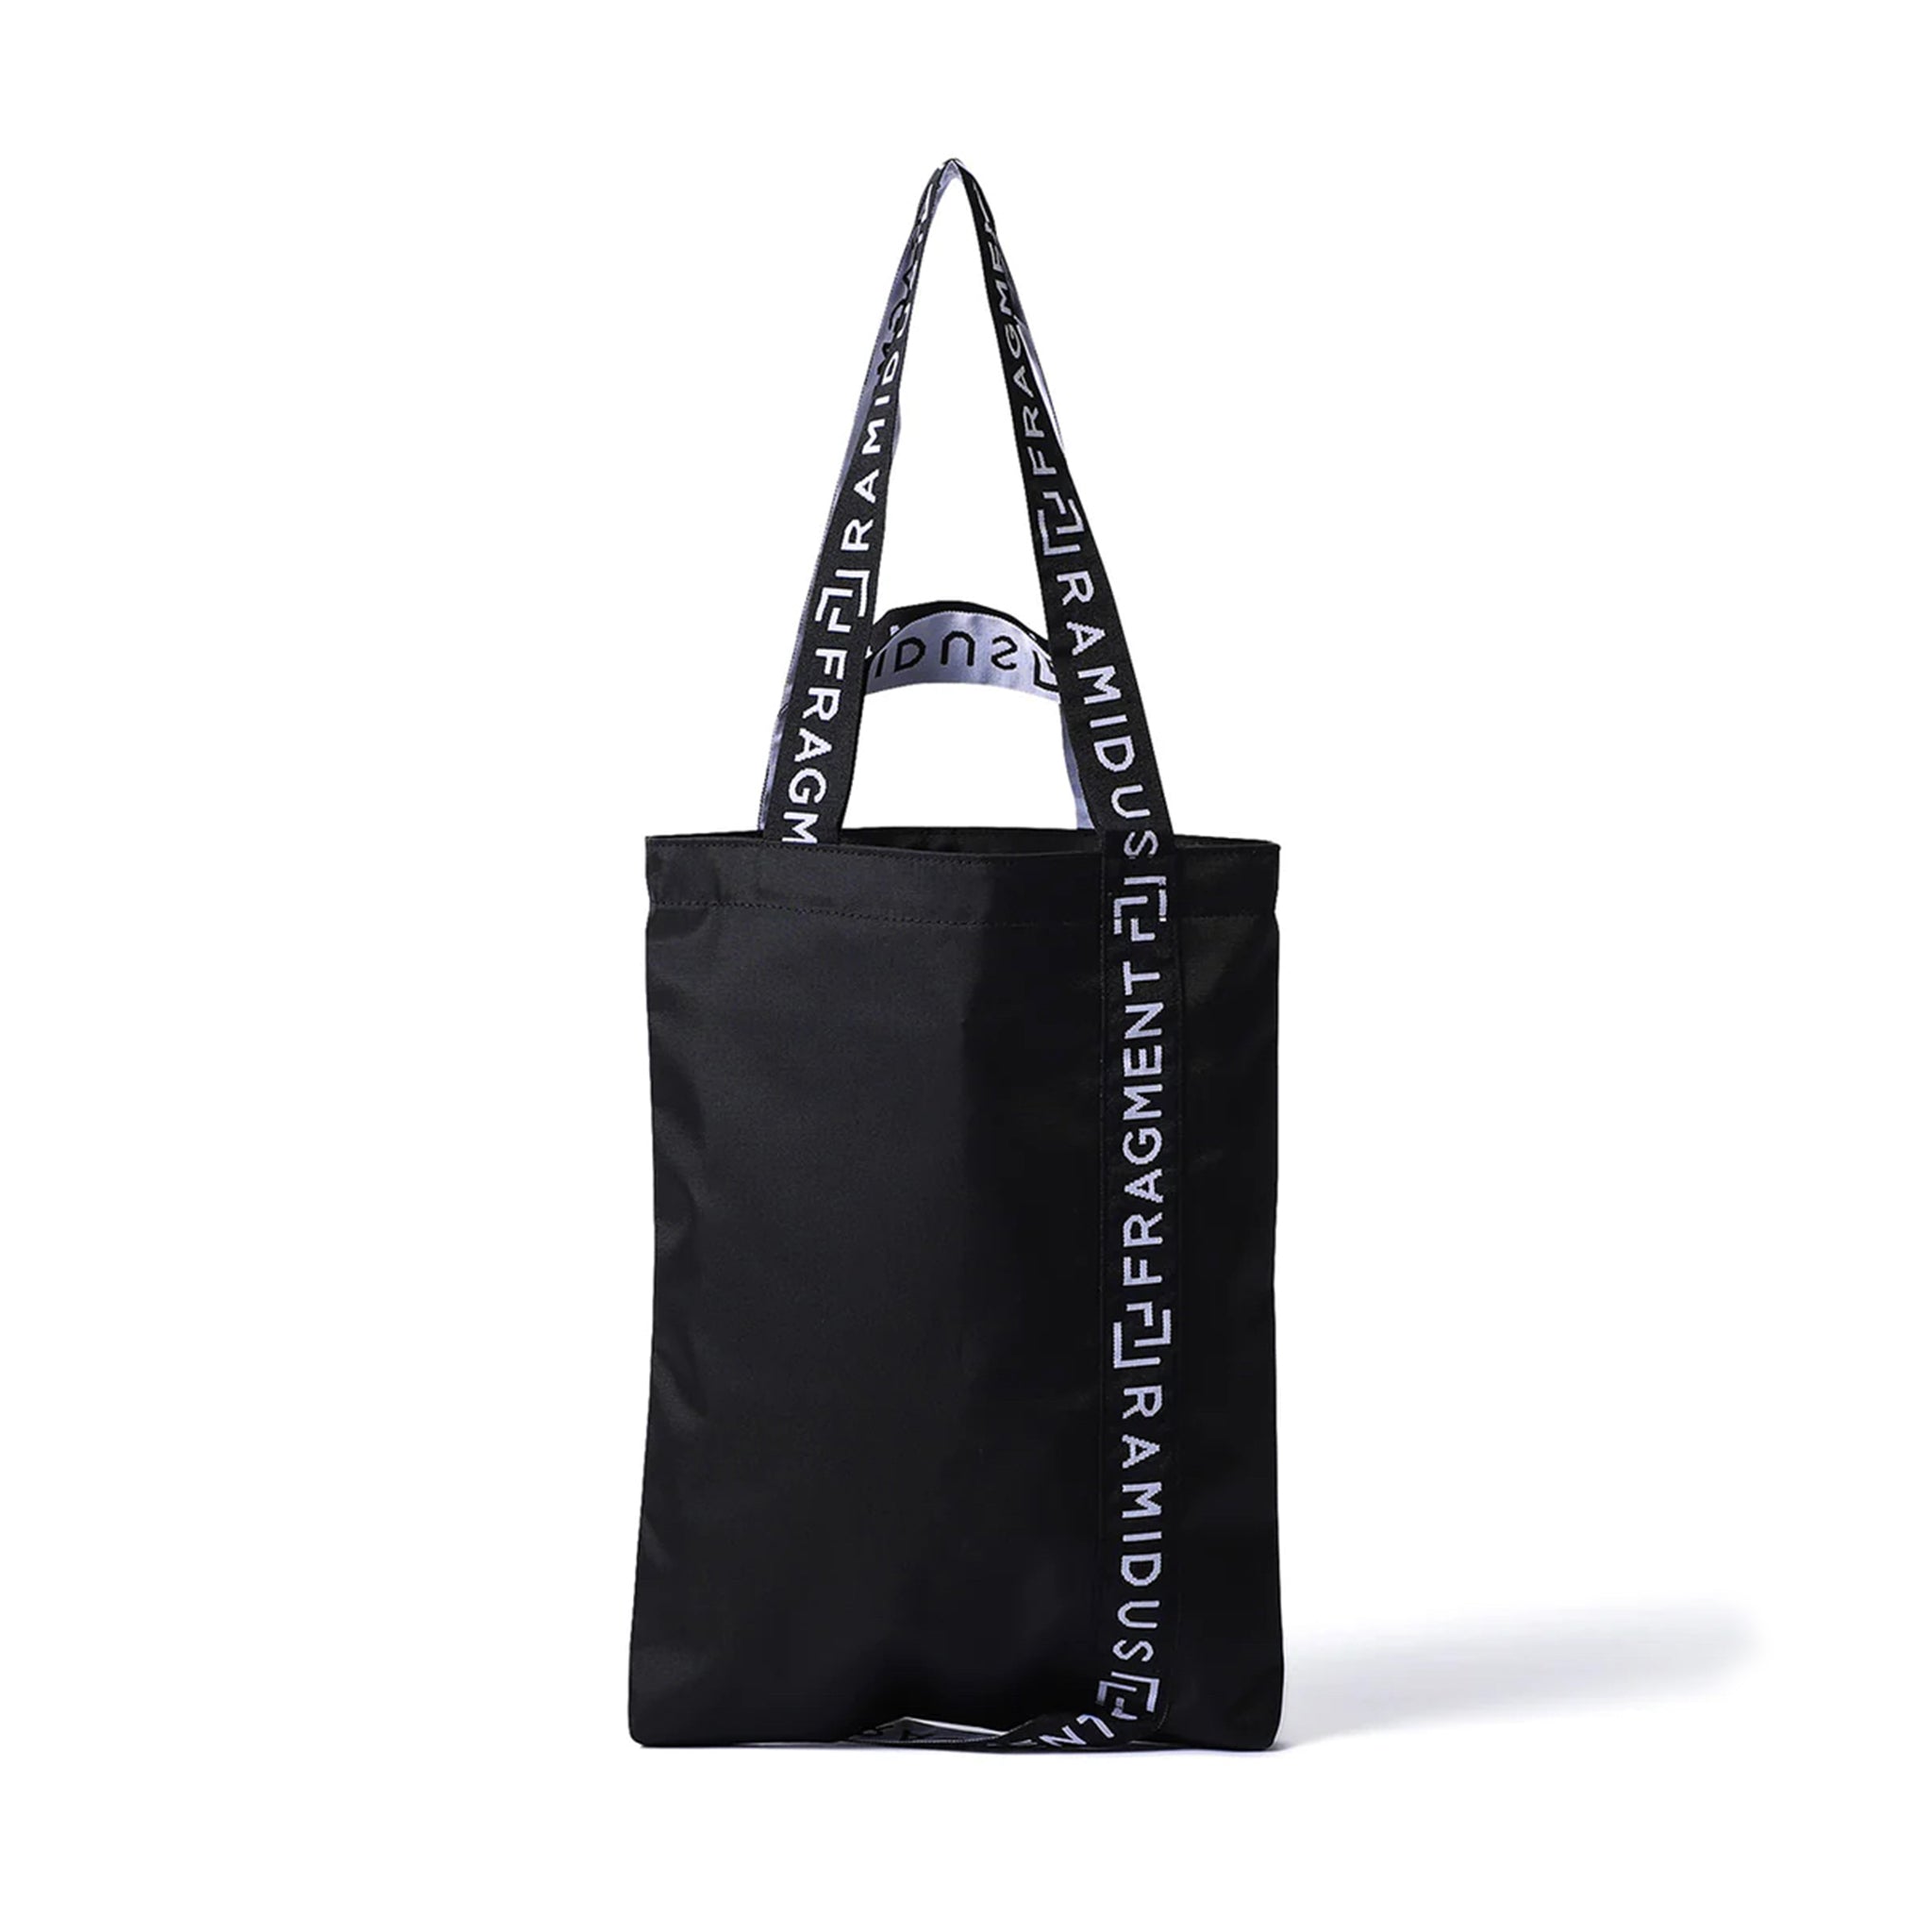 B008004] Ramidus x Fragment Design Tote Bag S (Black) – The Darkside  Initiative